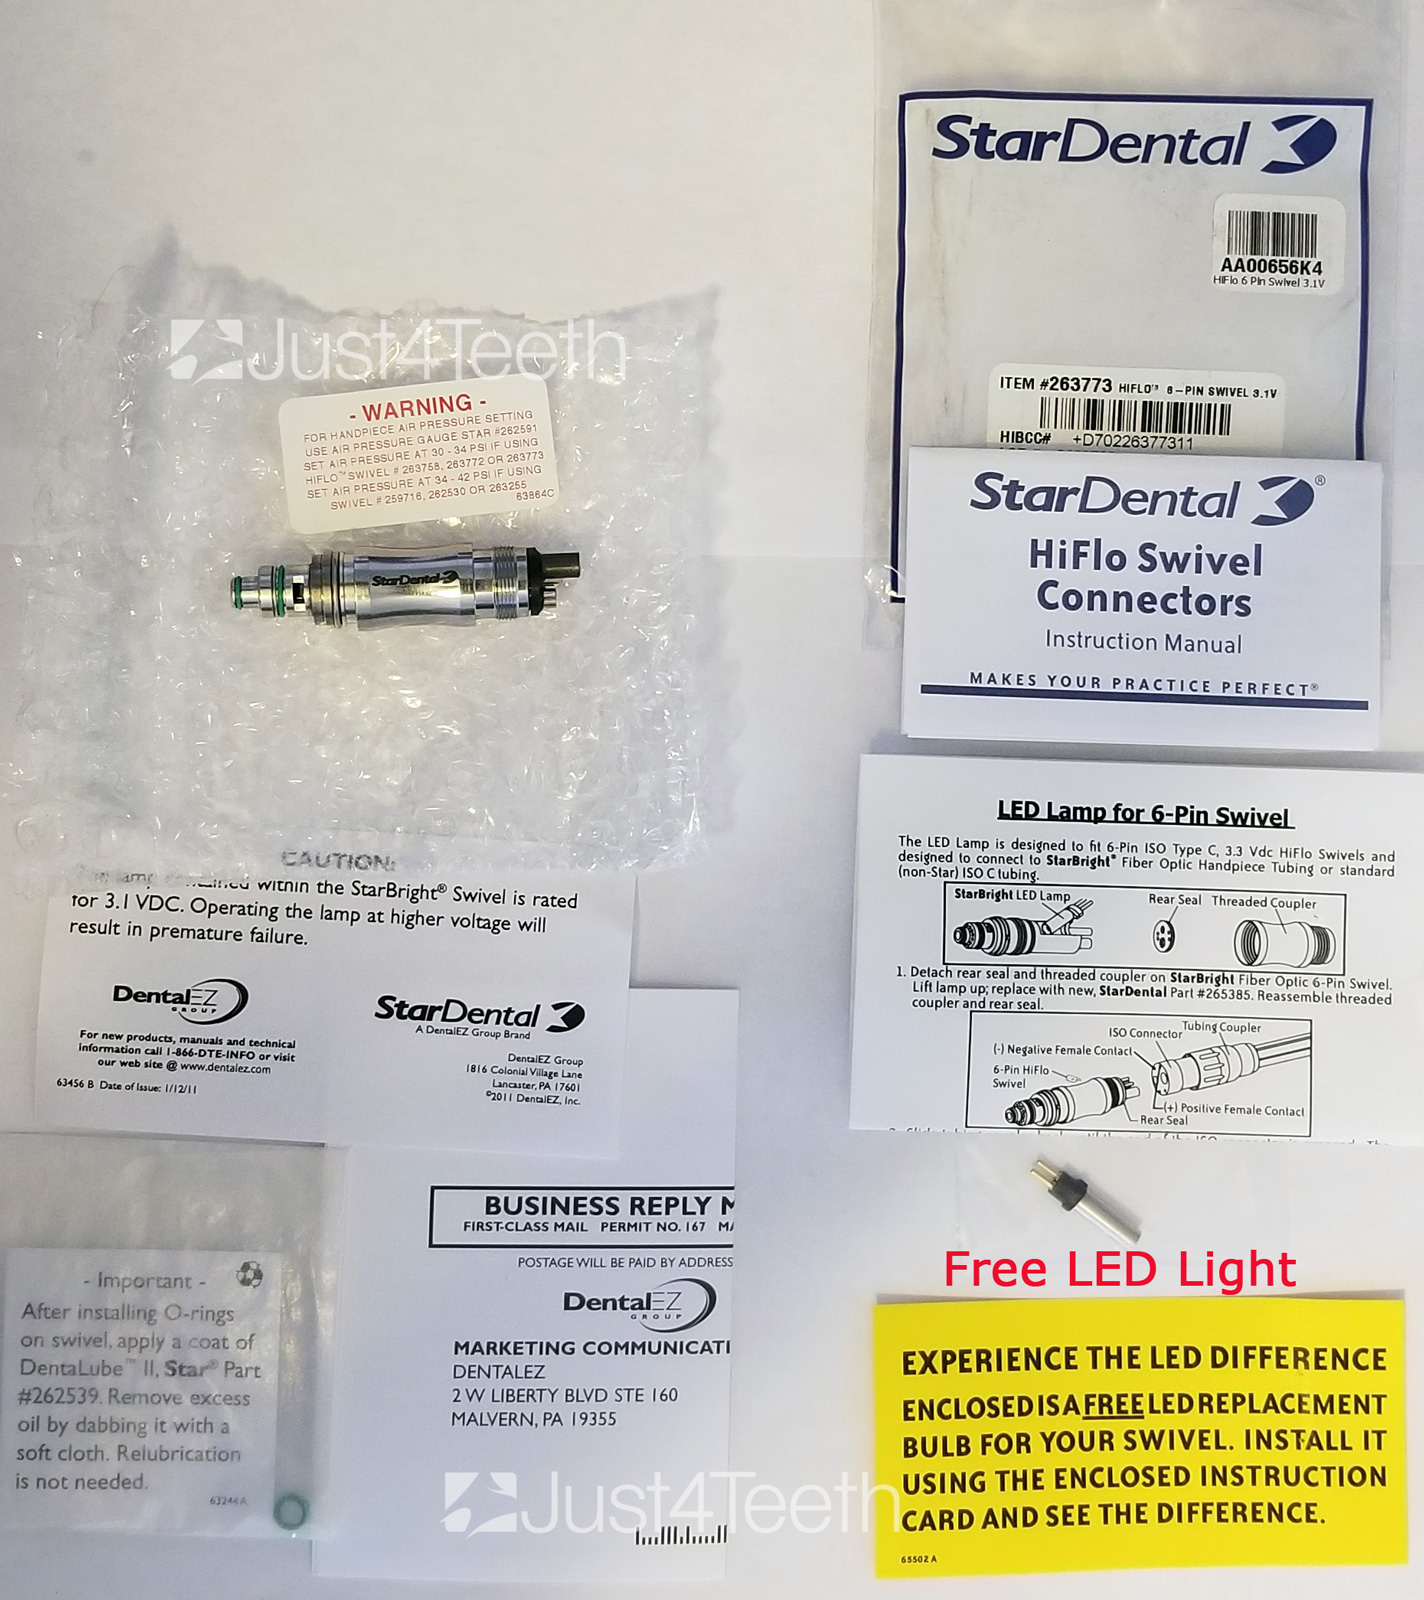 Star Dental 6 pin Swivel Connector 263773